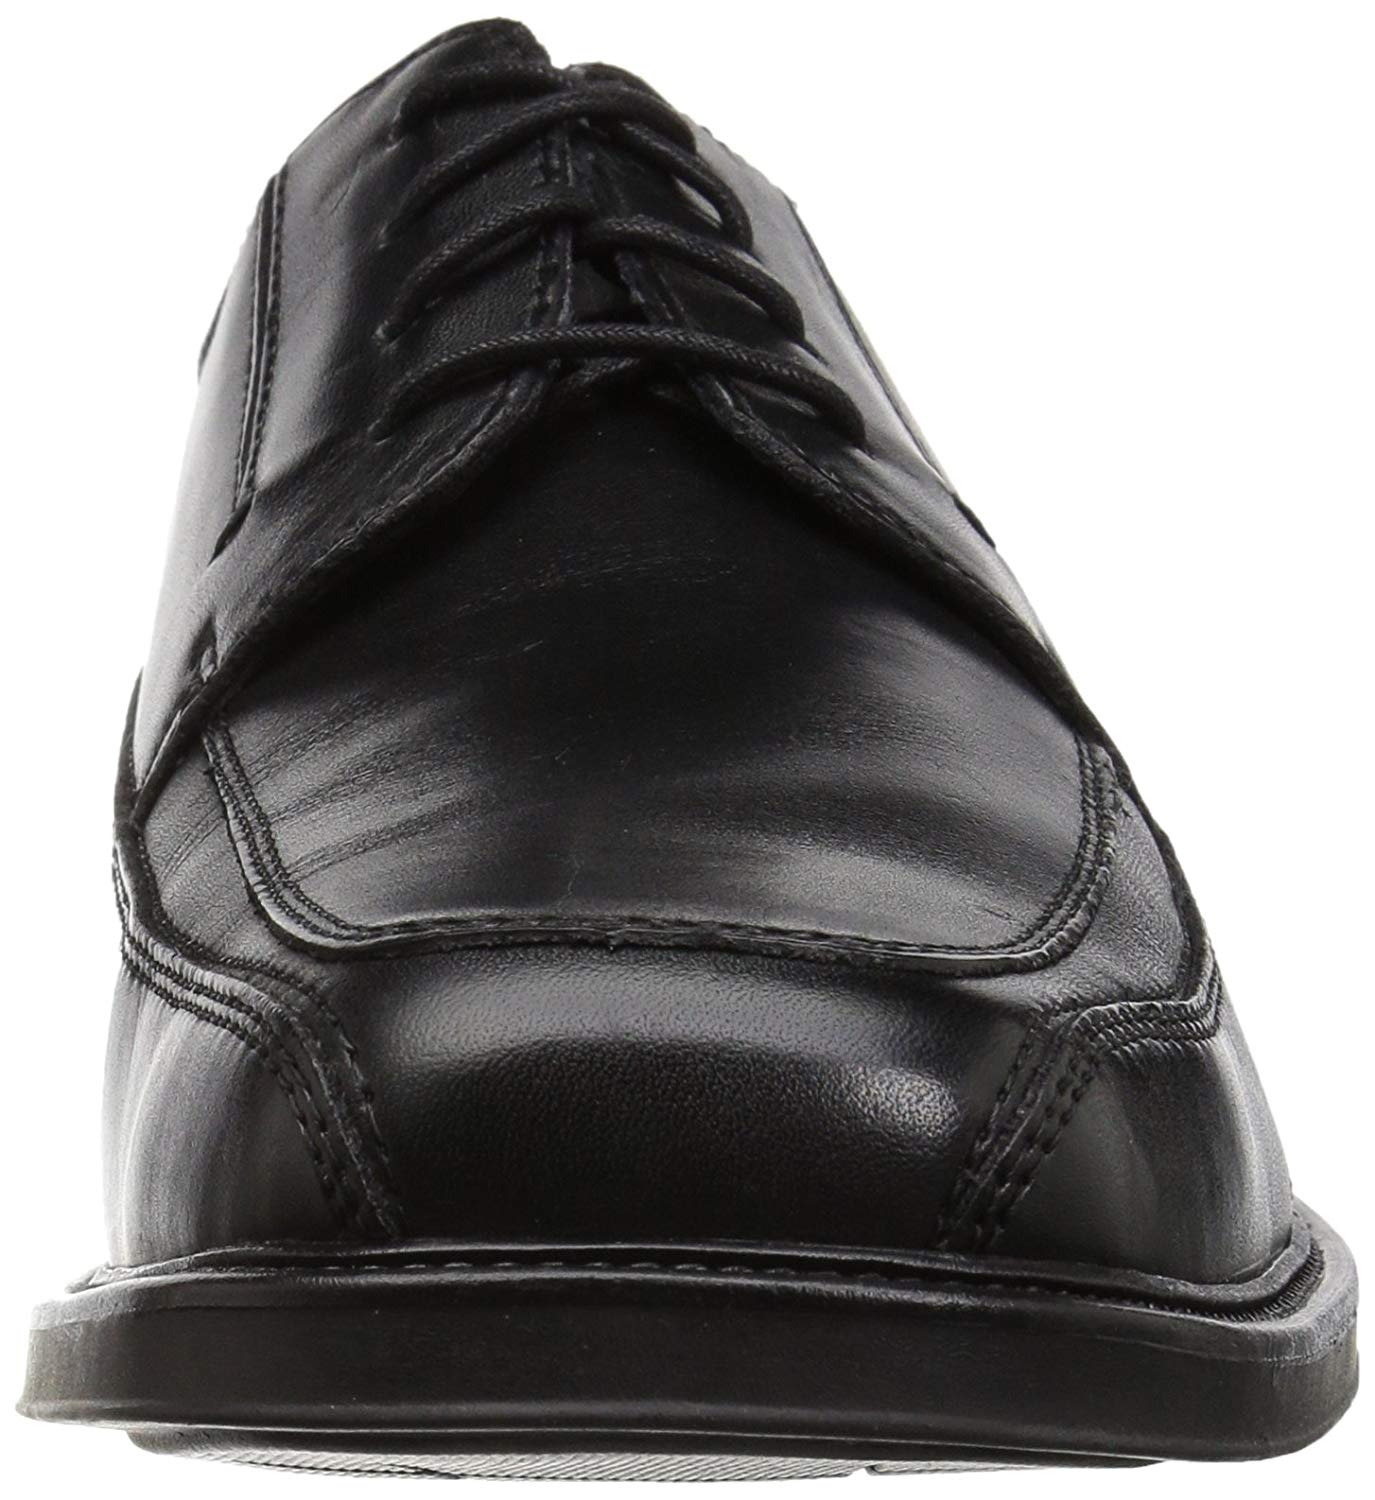 Dockers Men’s Perspective Leather Oxford Dress Shoe, Black, Size 10.0 ...